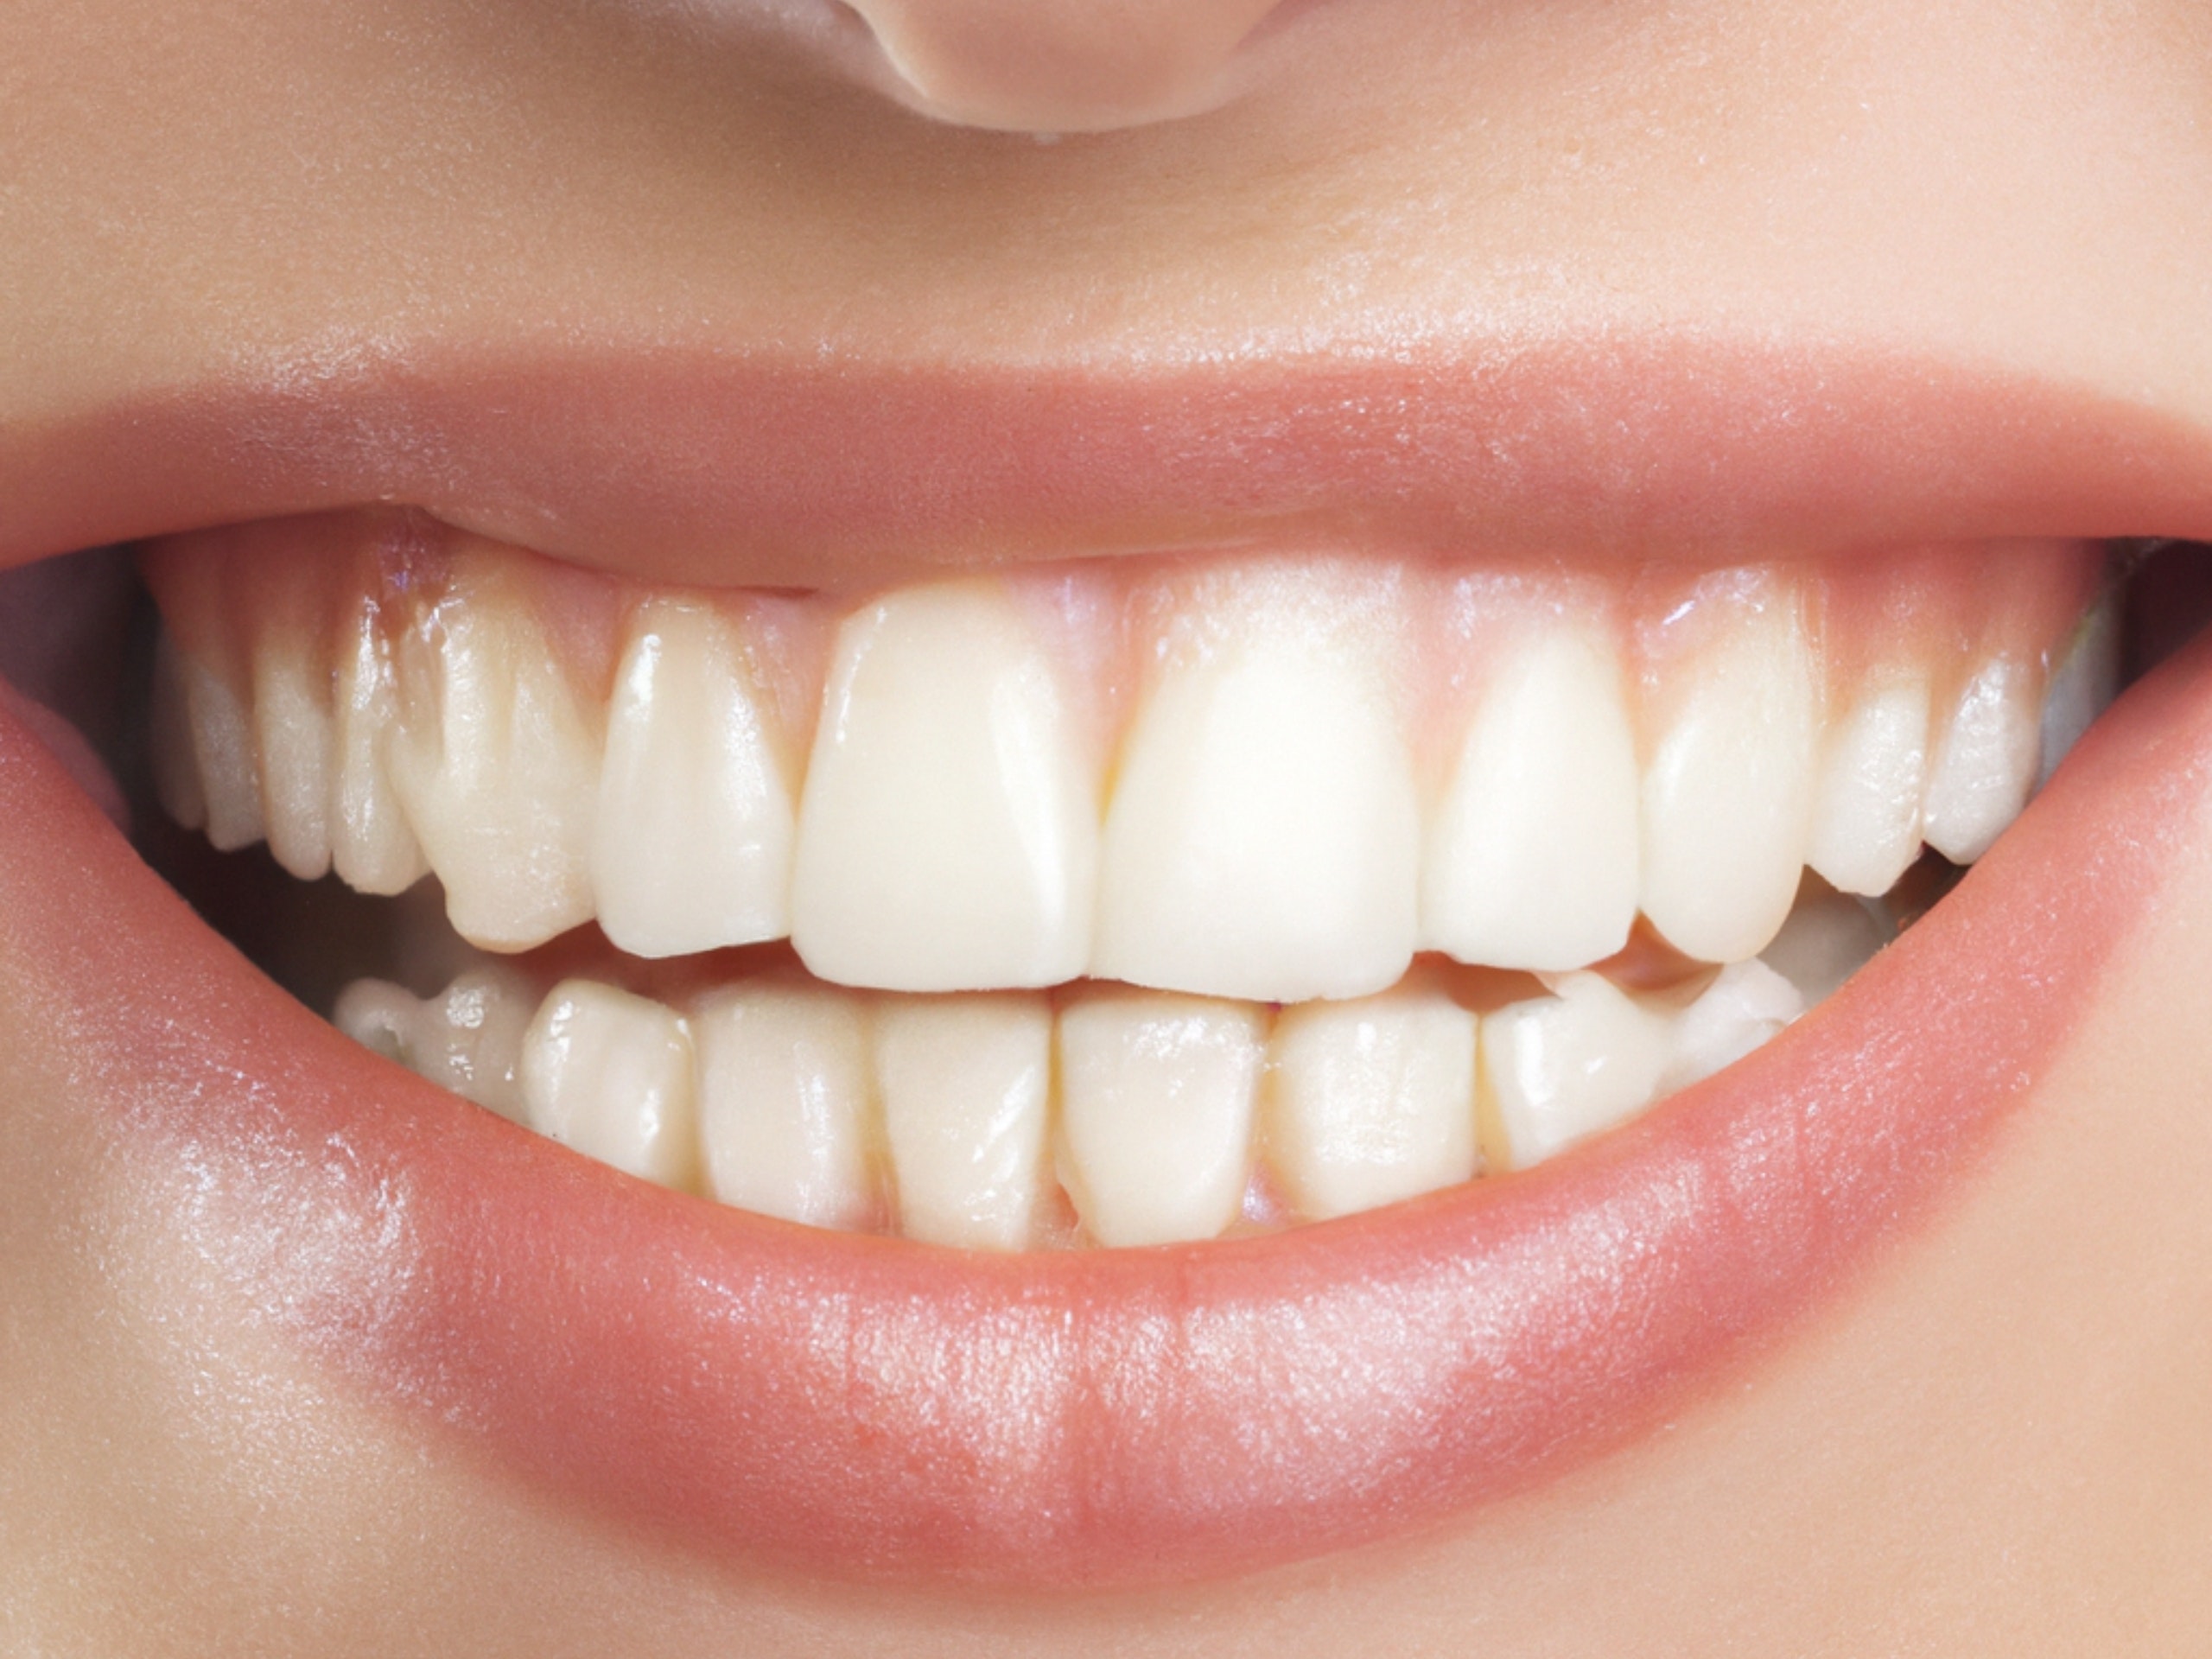 Beyond Teeth Masterful Dental Marketing for Lasting Impressions